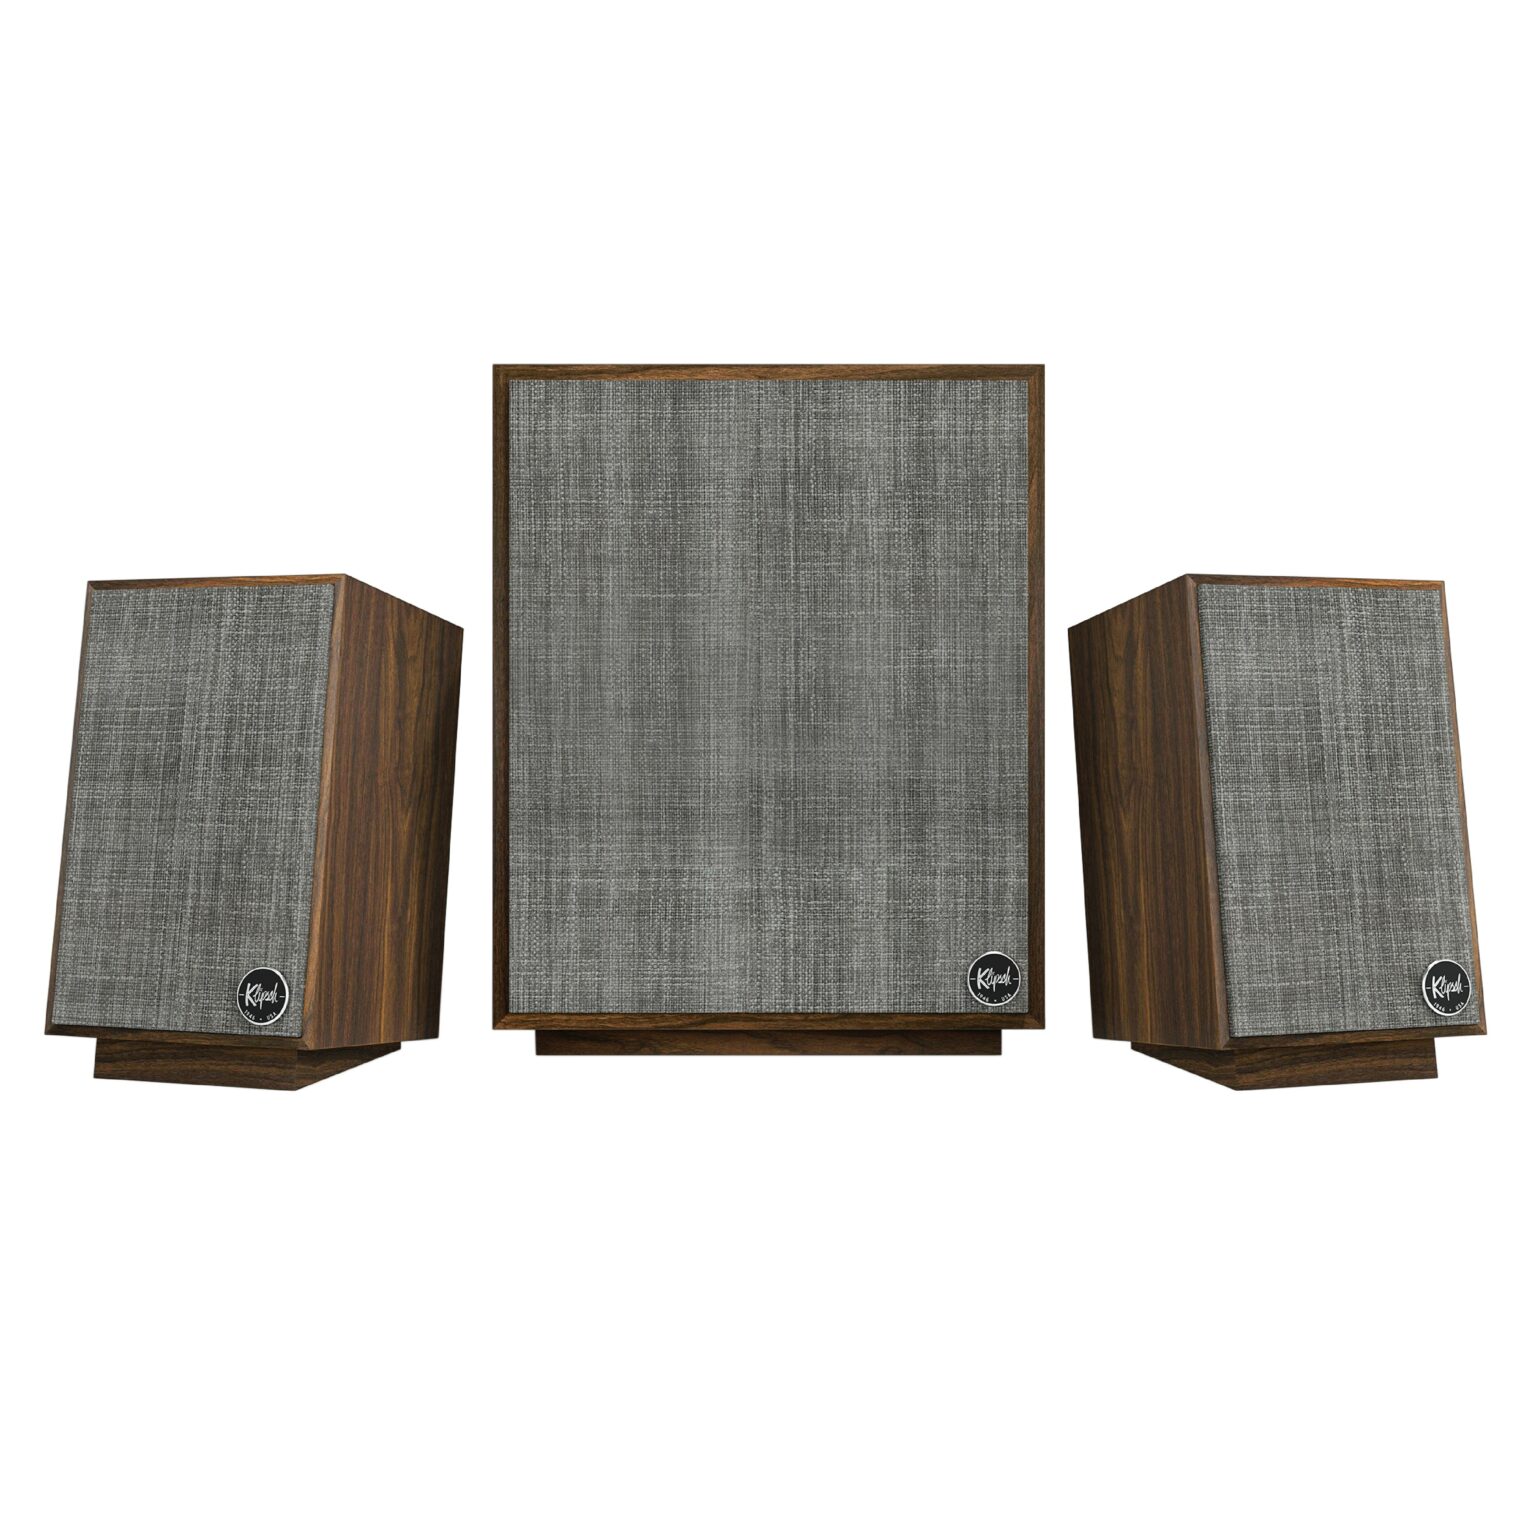 Klipsch's new ProMedia Heritage 2.1 speaker set has a groovy 1970s look.